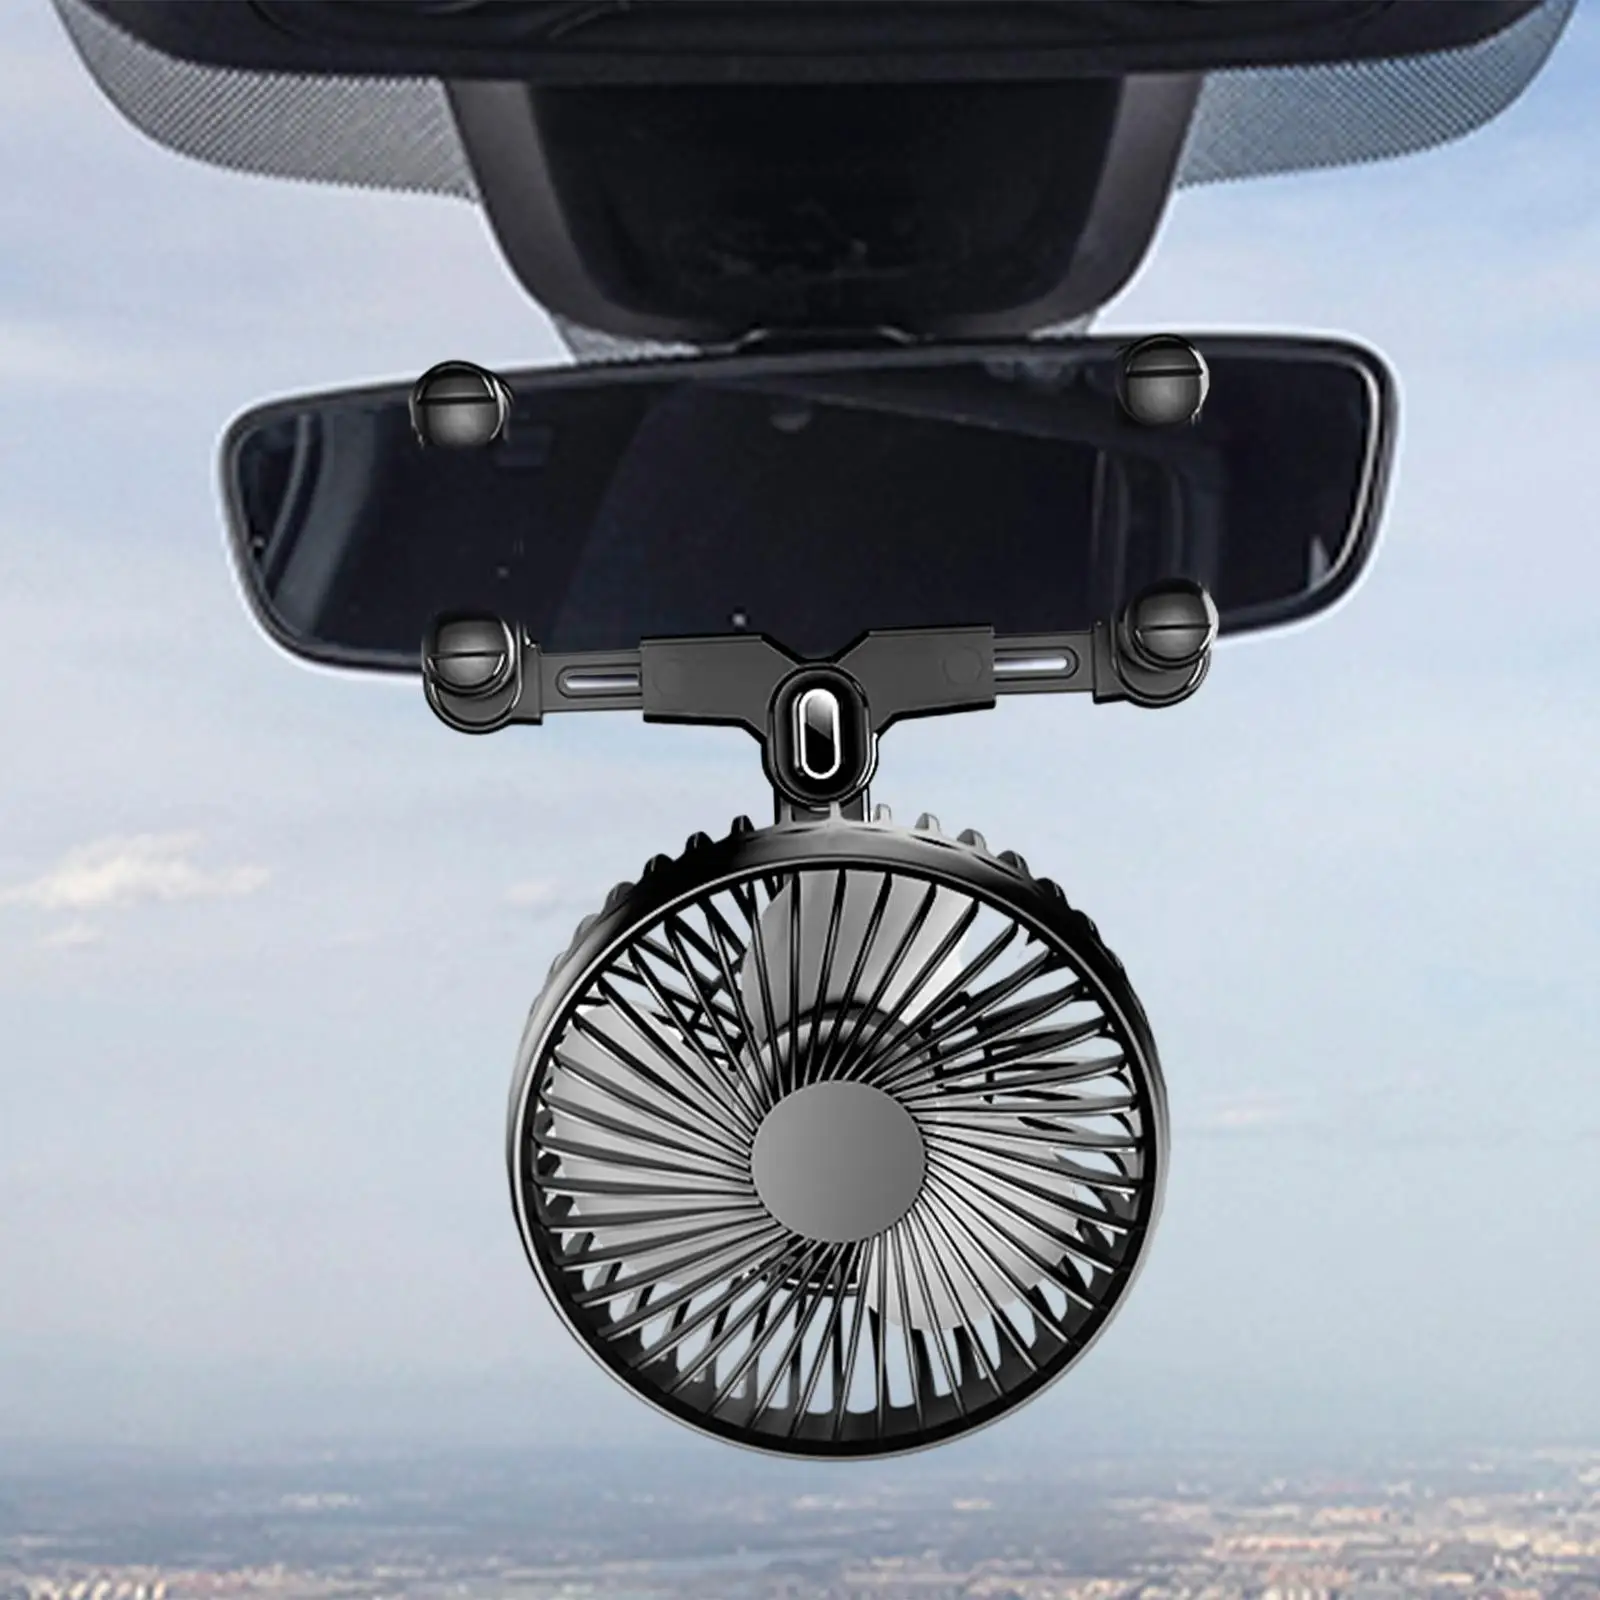 Car Fan 3 Speeds Vehicle Supplies RV 360 Degree Rotatable Electric Car Fan